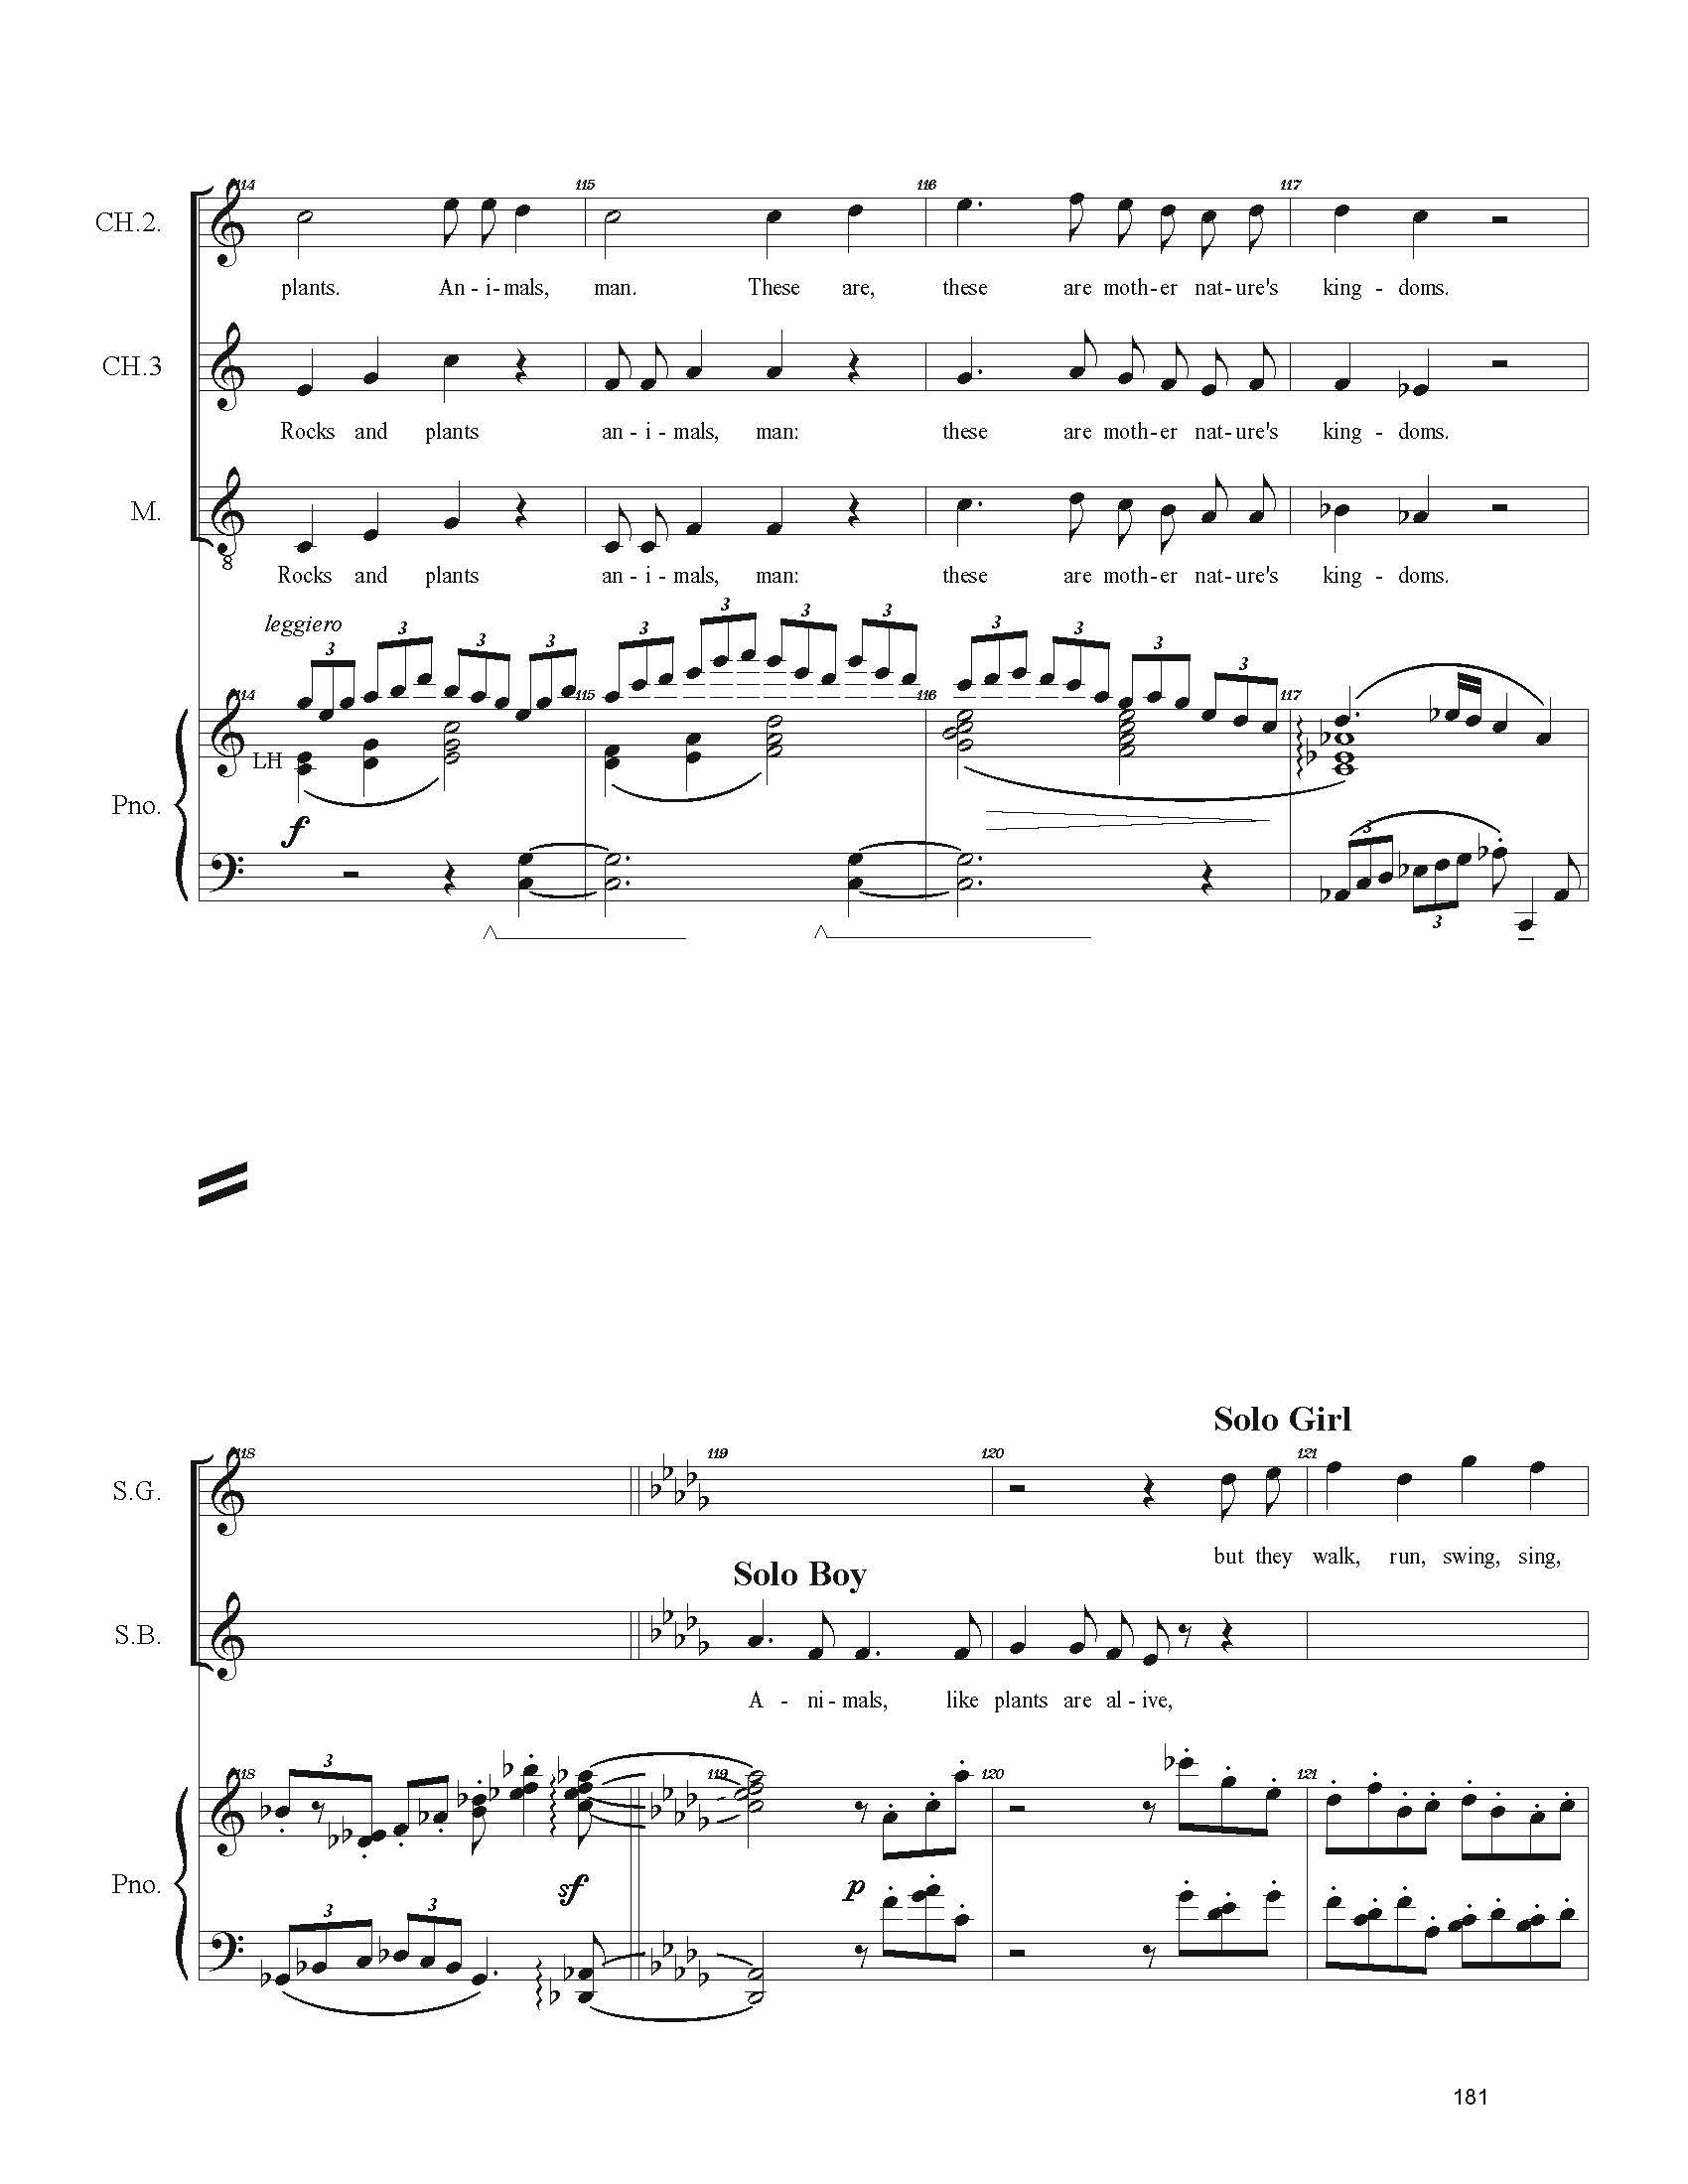 FULL PIANO VOCAL SCORE DRAFT 1 - Score_Page_181.jpg